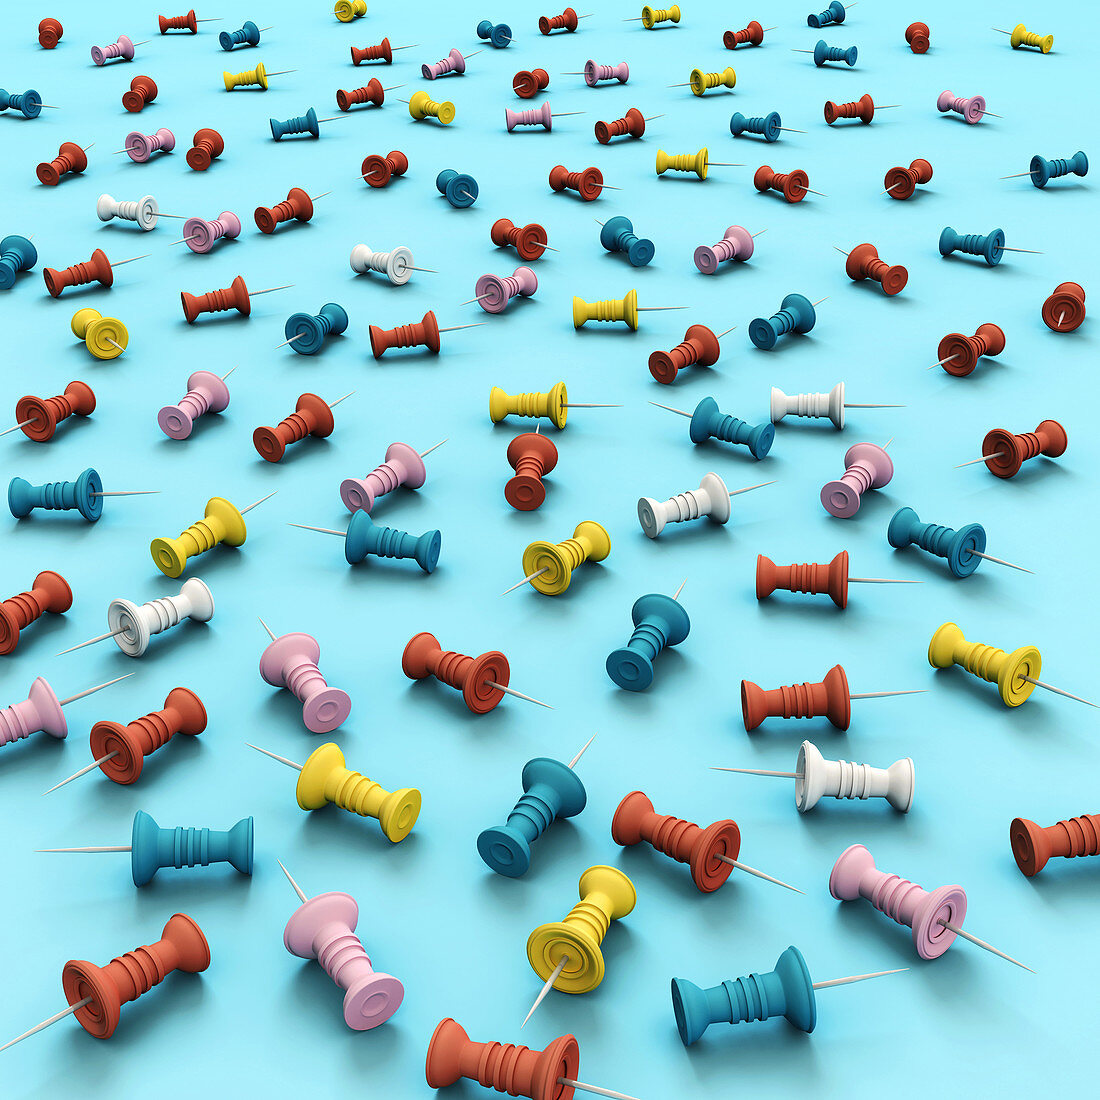 Illustration of various multi coloured thumb tacks